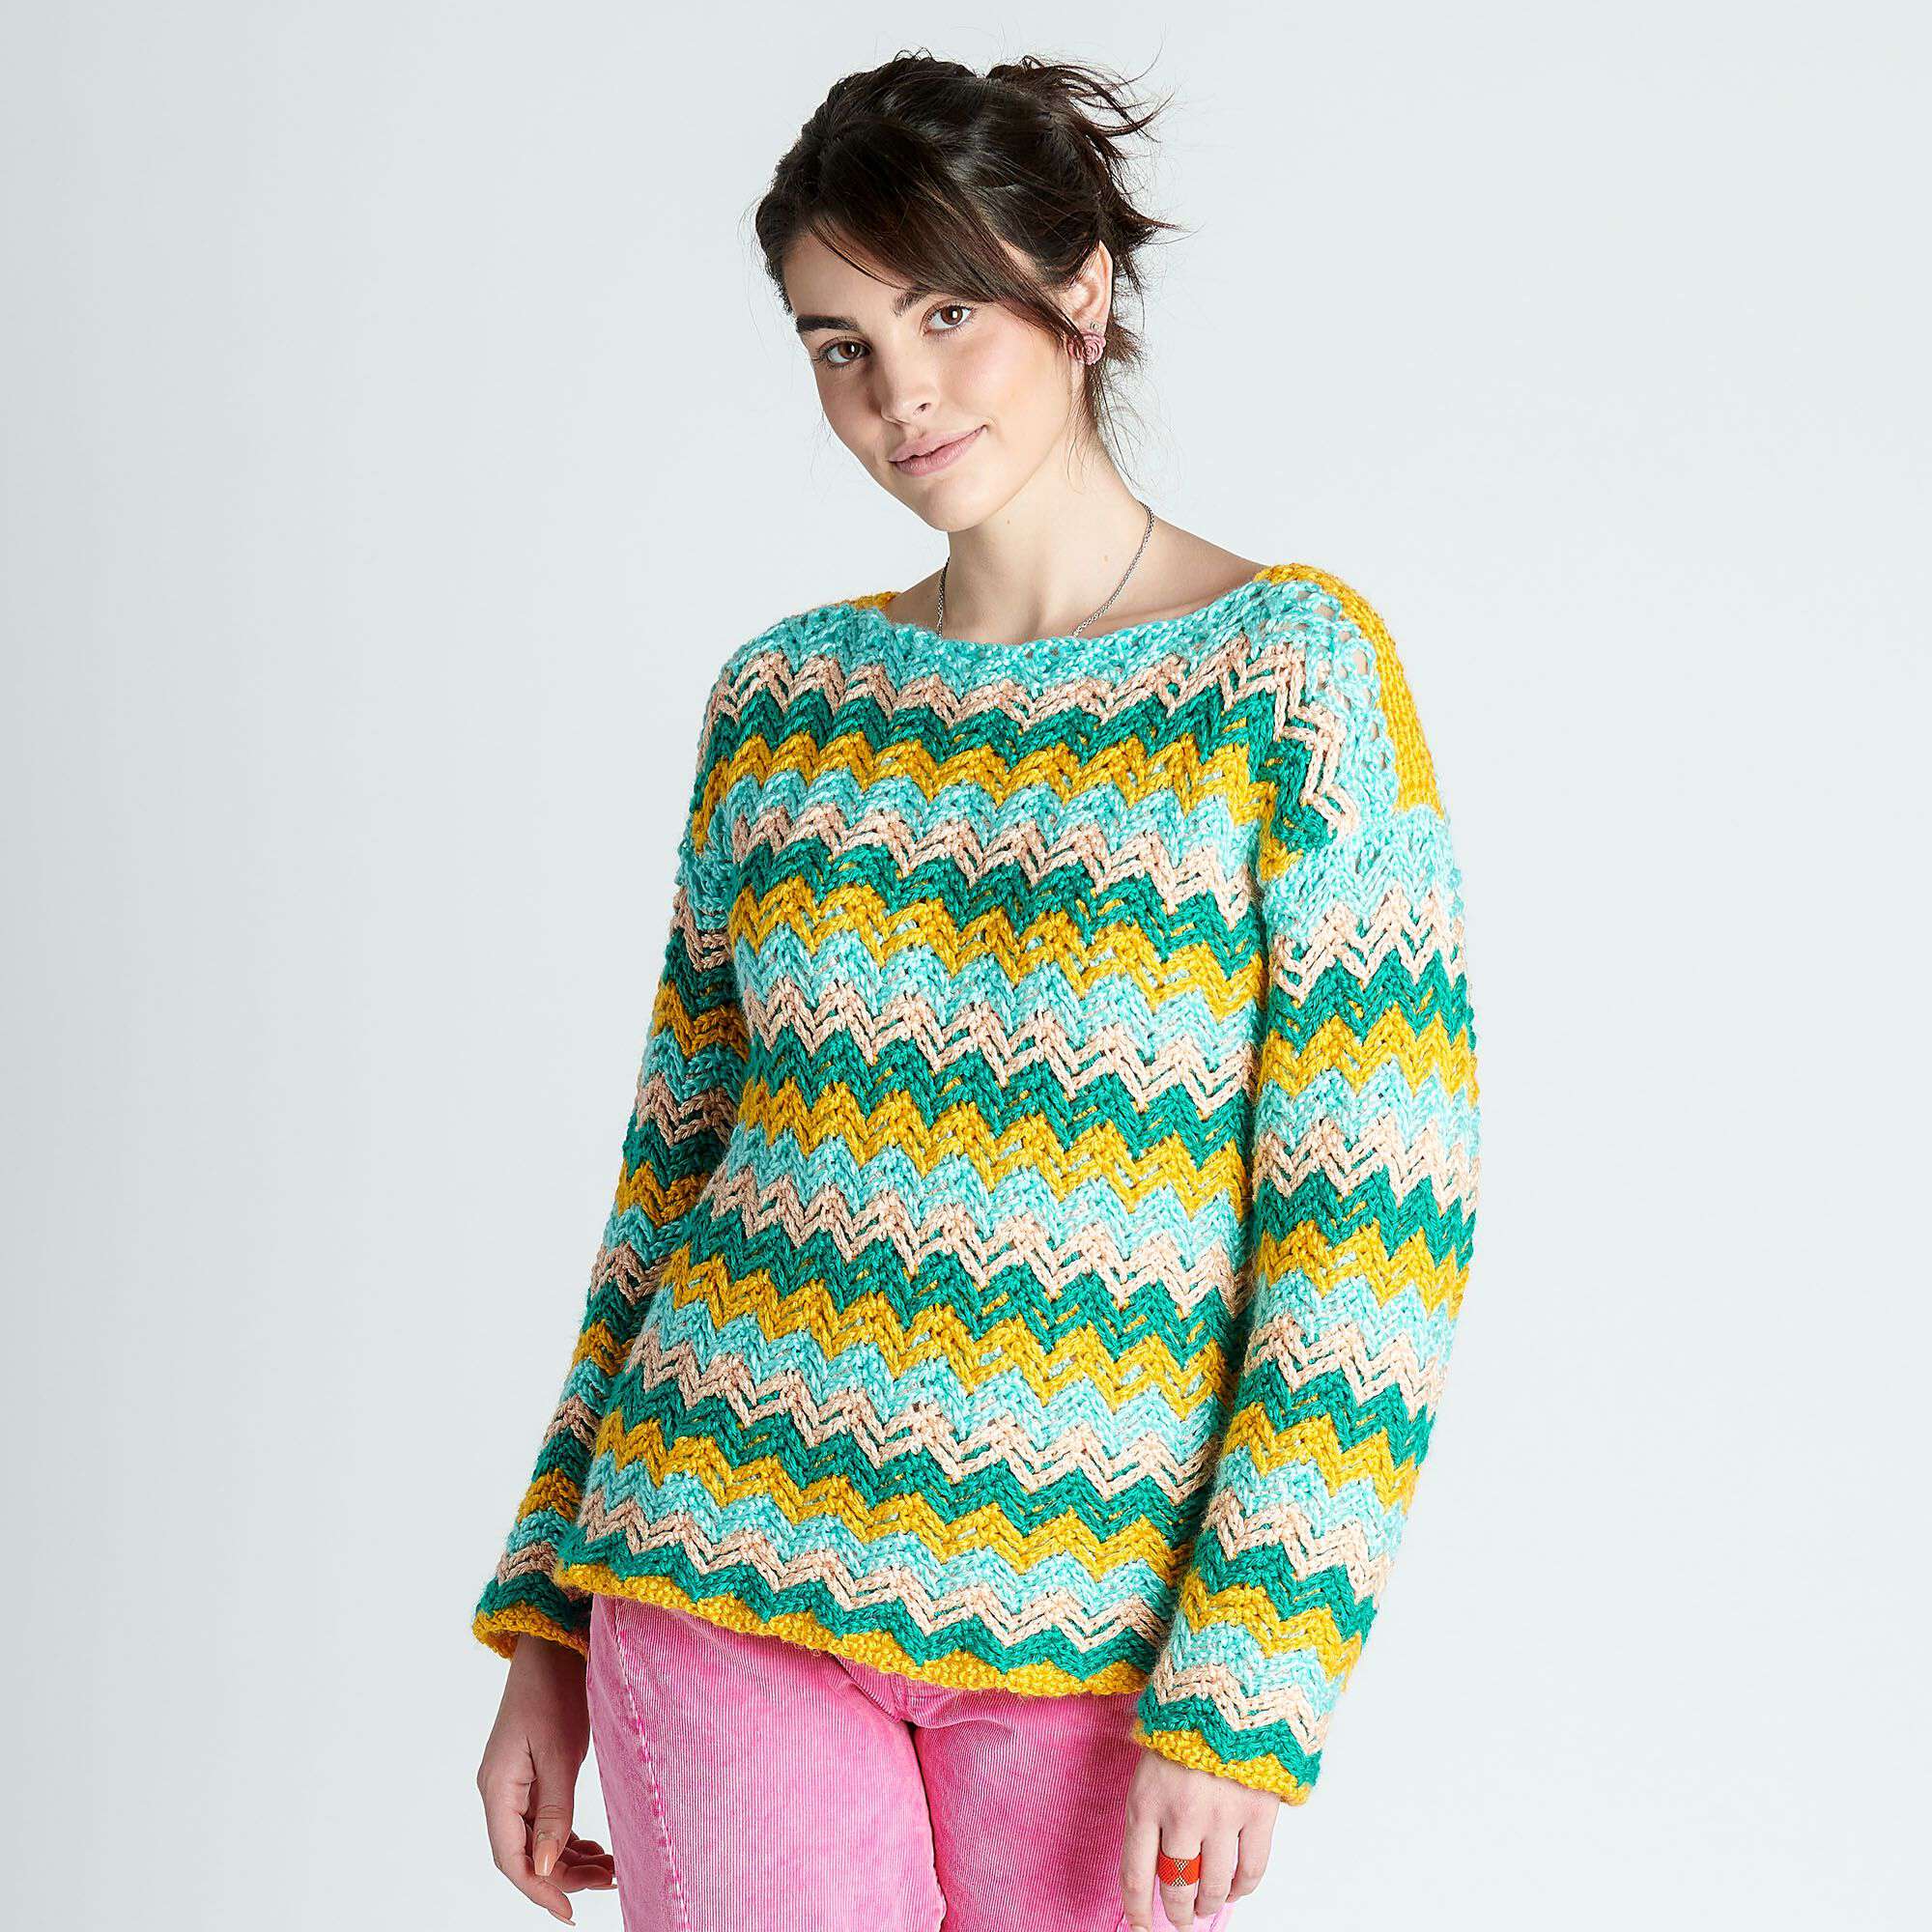 Free-Crochet-Pattern-for-a-Zig-Zag-Crochet-Pullover